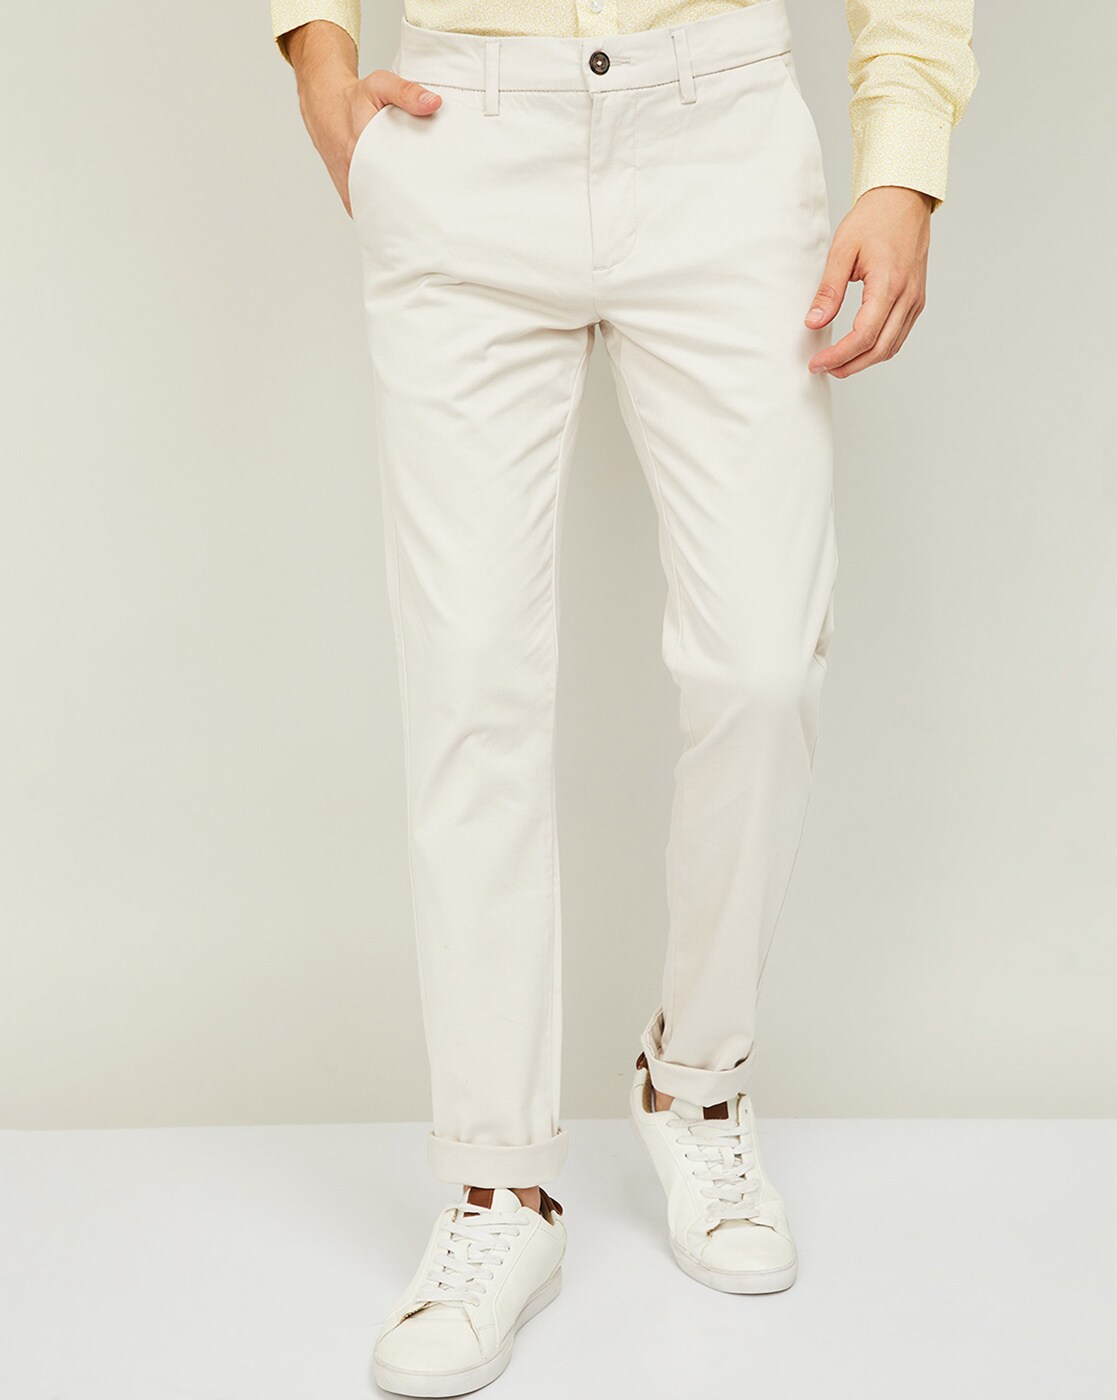 Hangup Regular Fit Men White Trousers - Buy Hangup Regular Fit Men White  Trousers Online at Best Prices in India | Flipkart.com